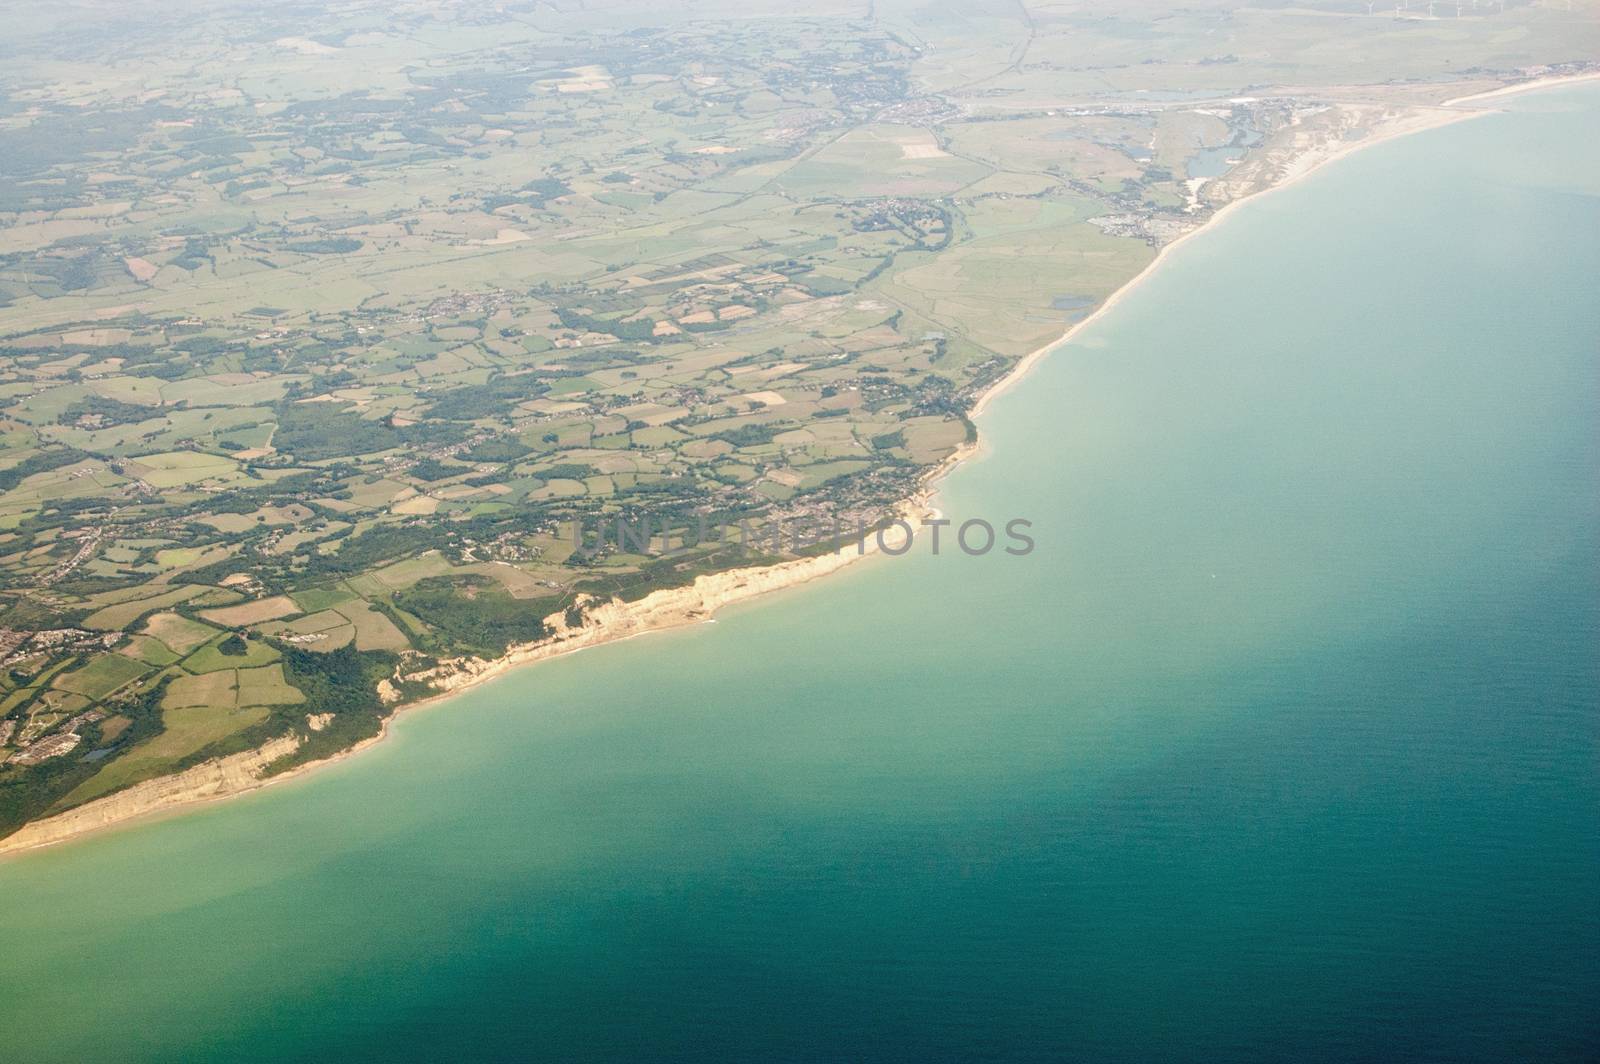 Sussex Coastline, Aerial View by BasPhoto